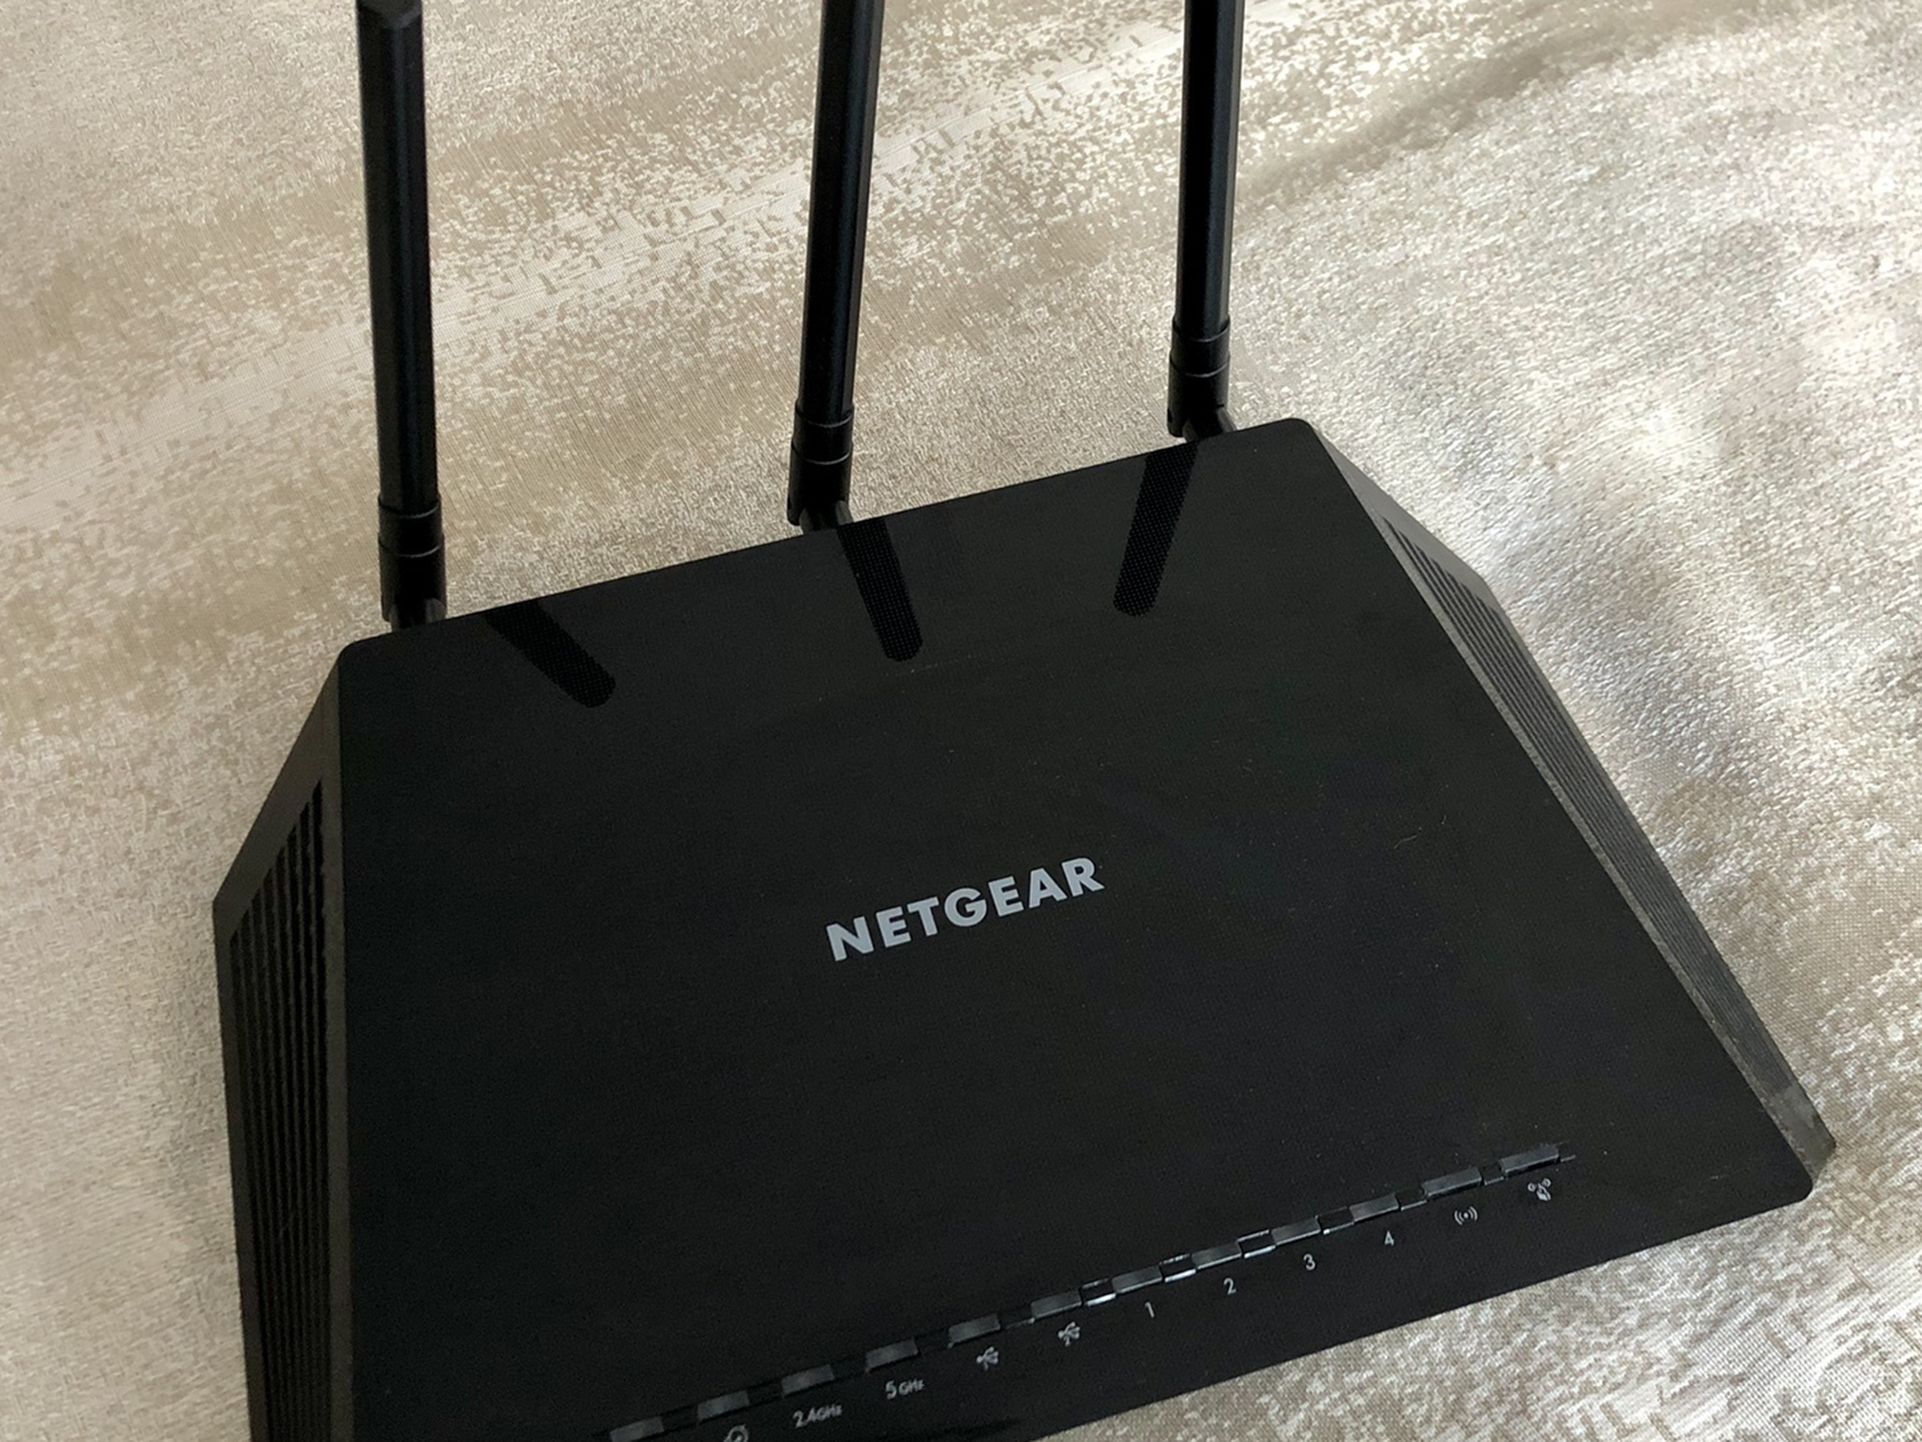 Netgear AC1750 Dual-Band WiFi Router